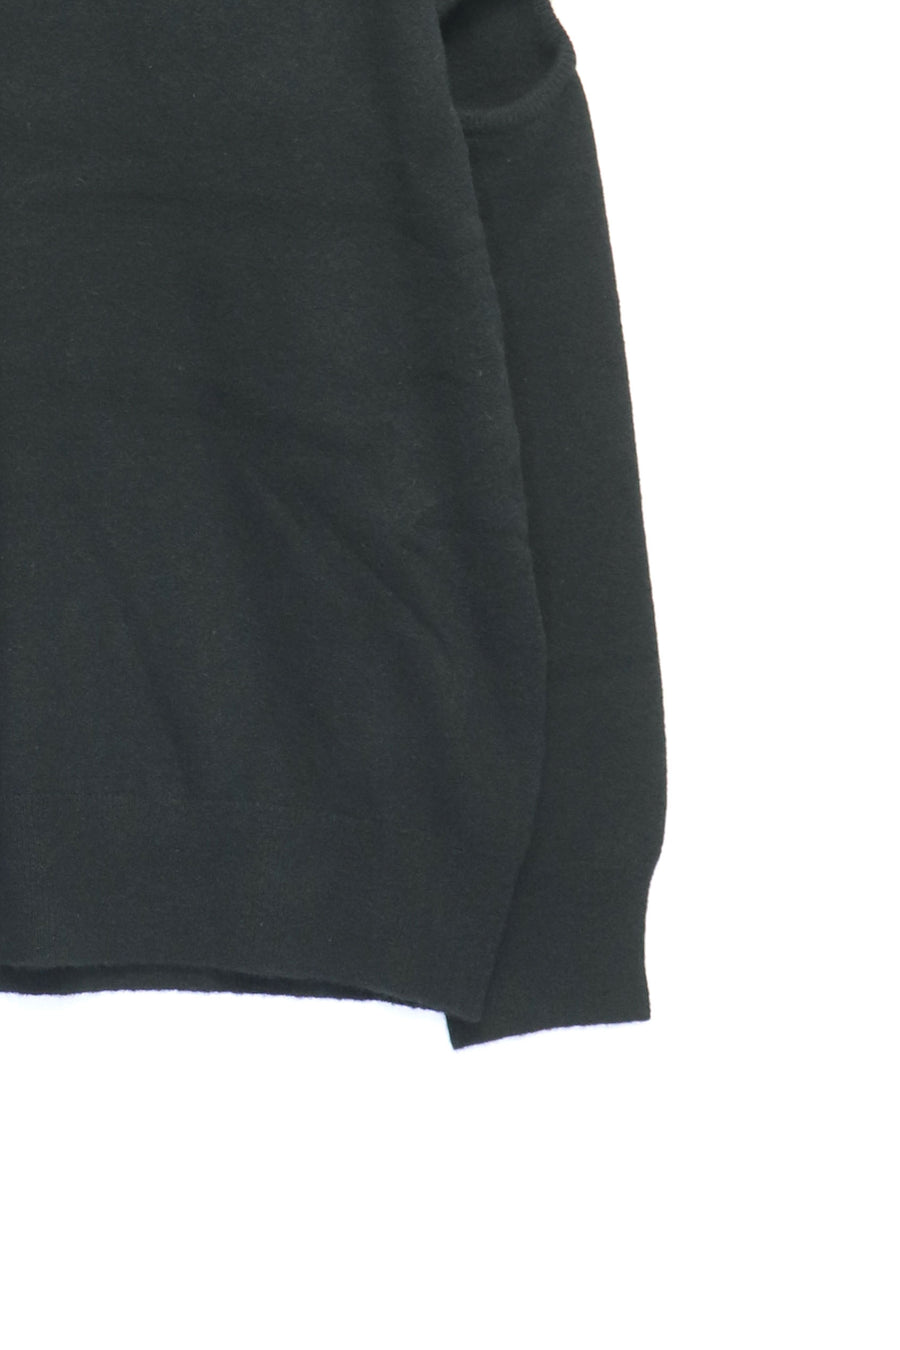 TOGA VIRILIS  Hole knit pullover(BLACK)